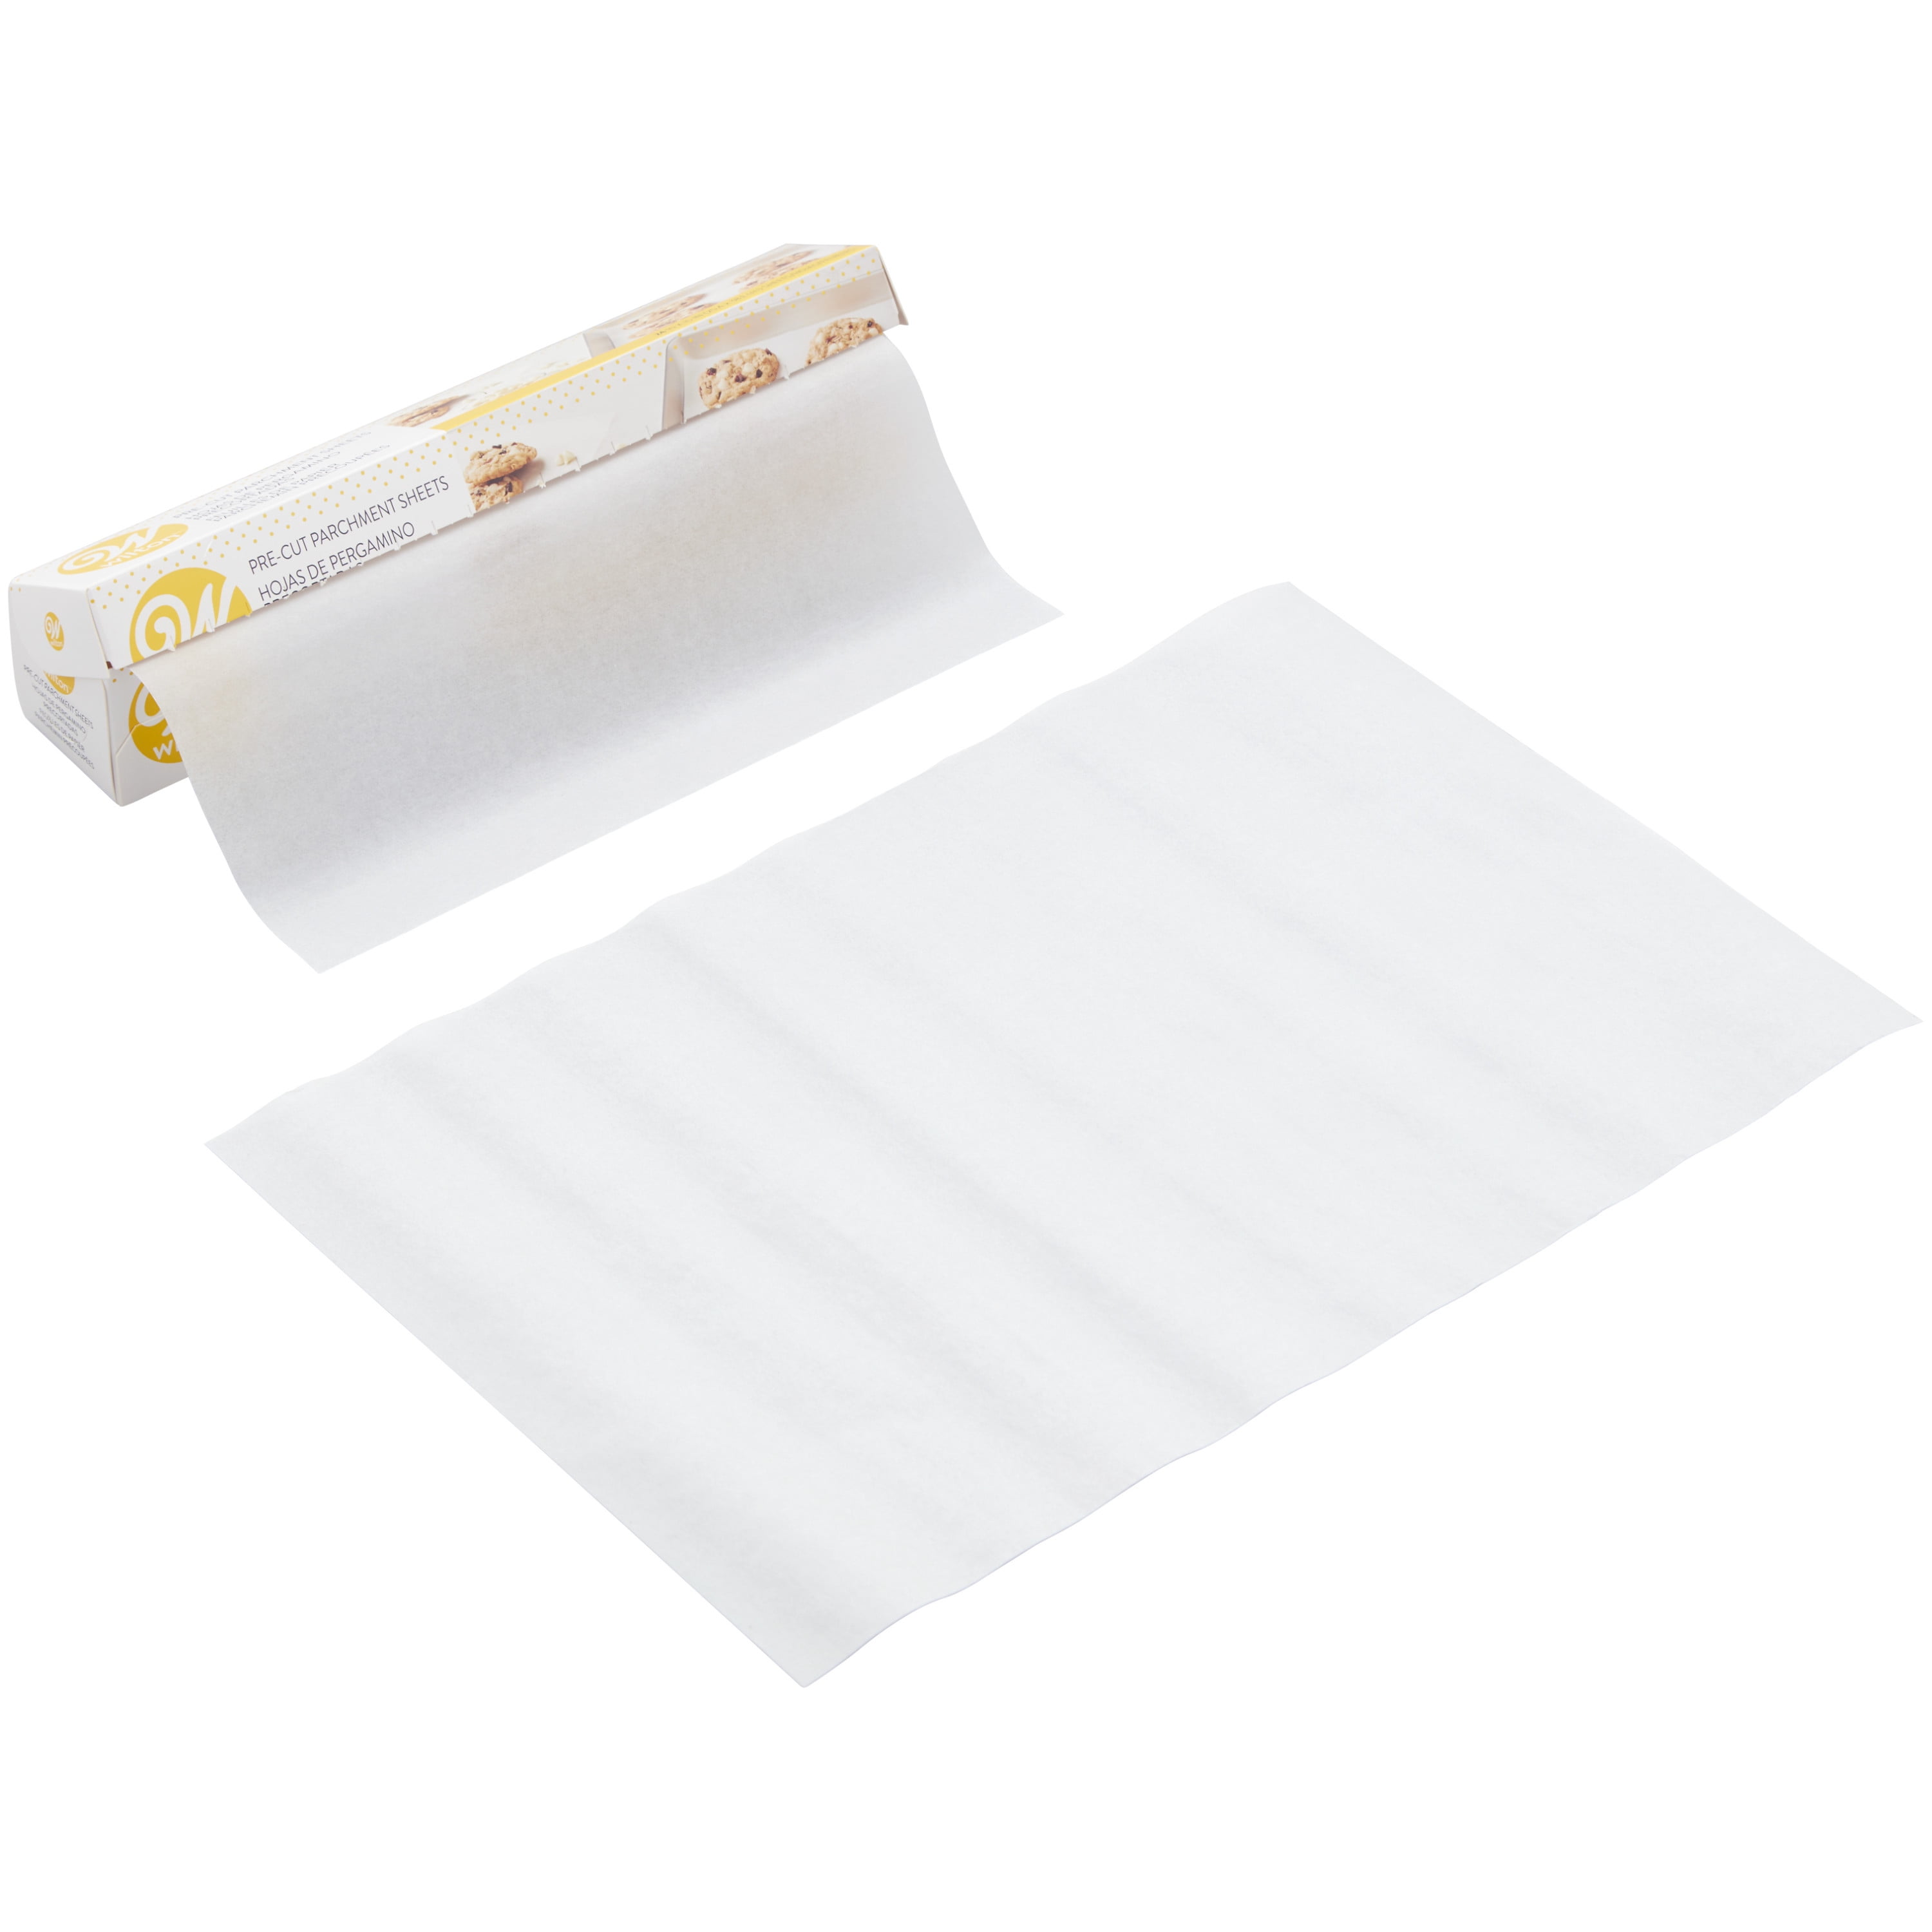 24ct Pre Cut Parchment Paper Squares With Lift Tabs by STIR